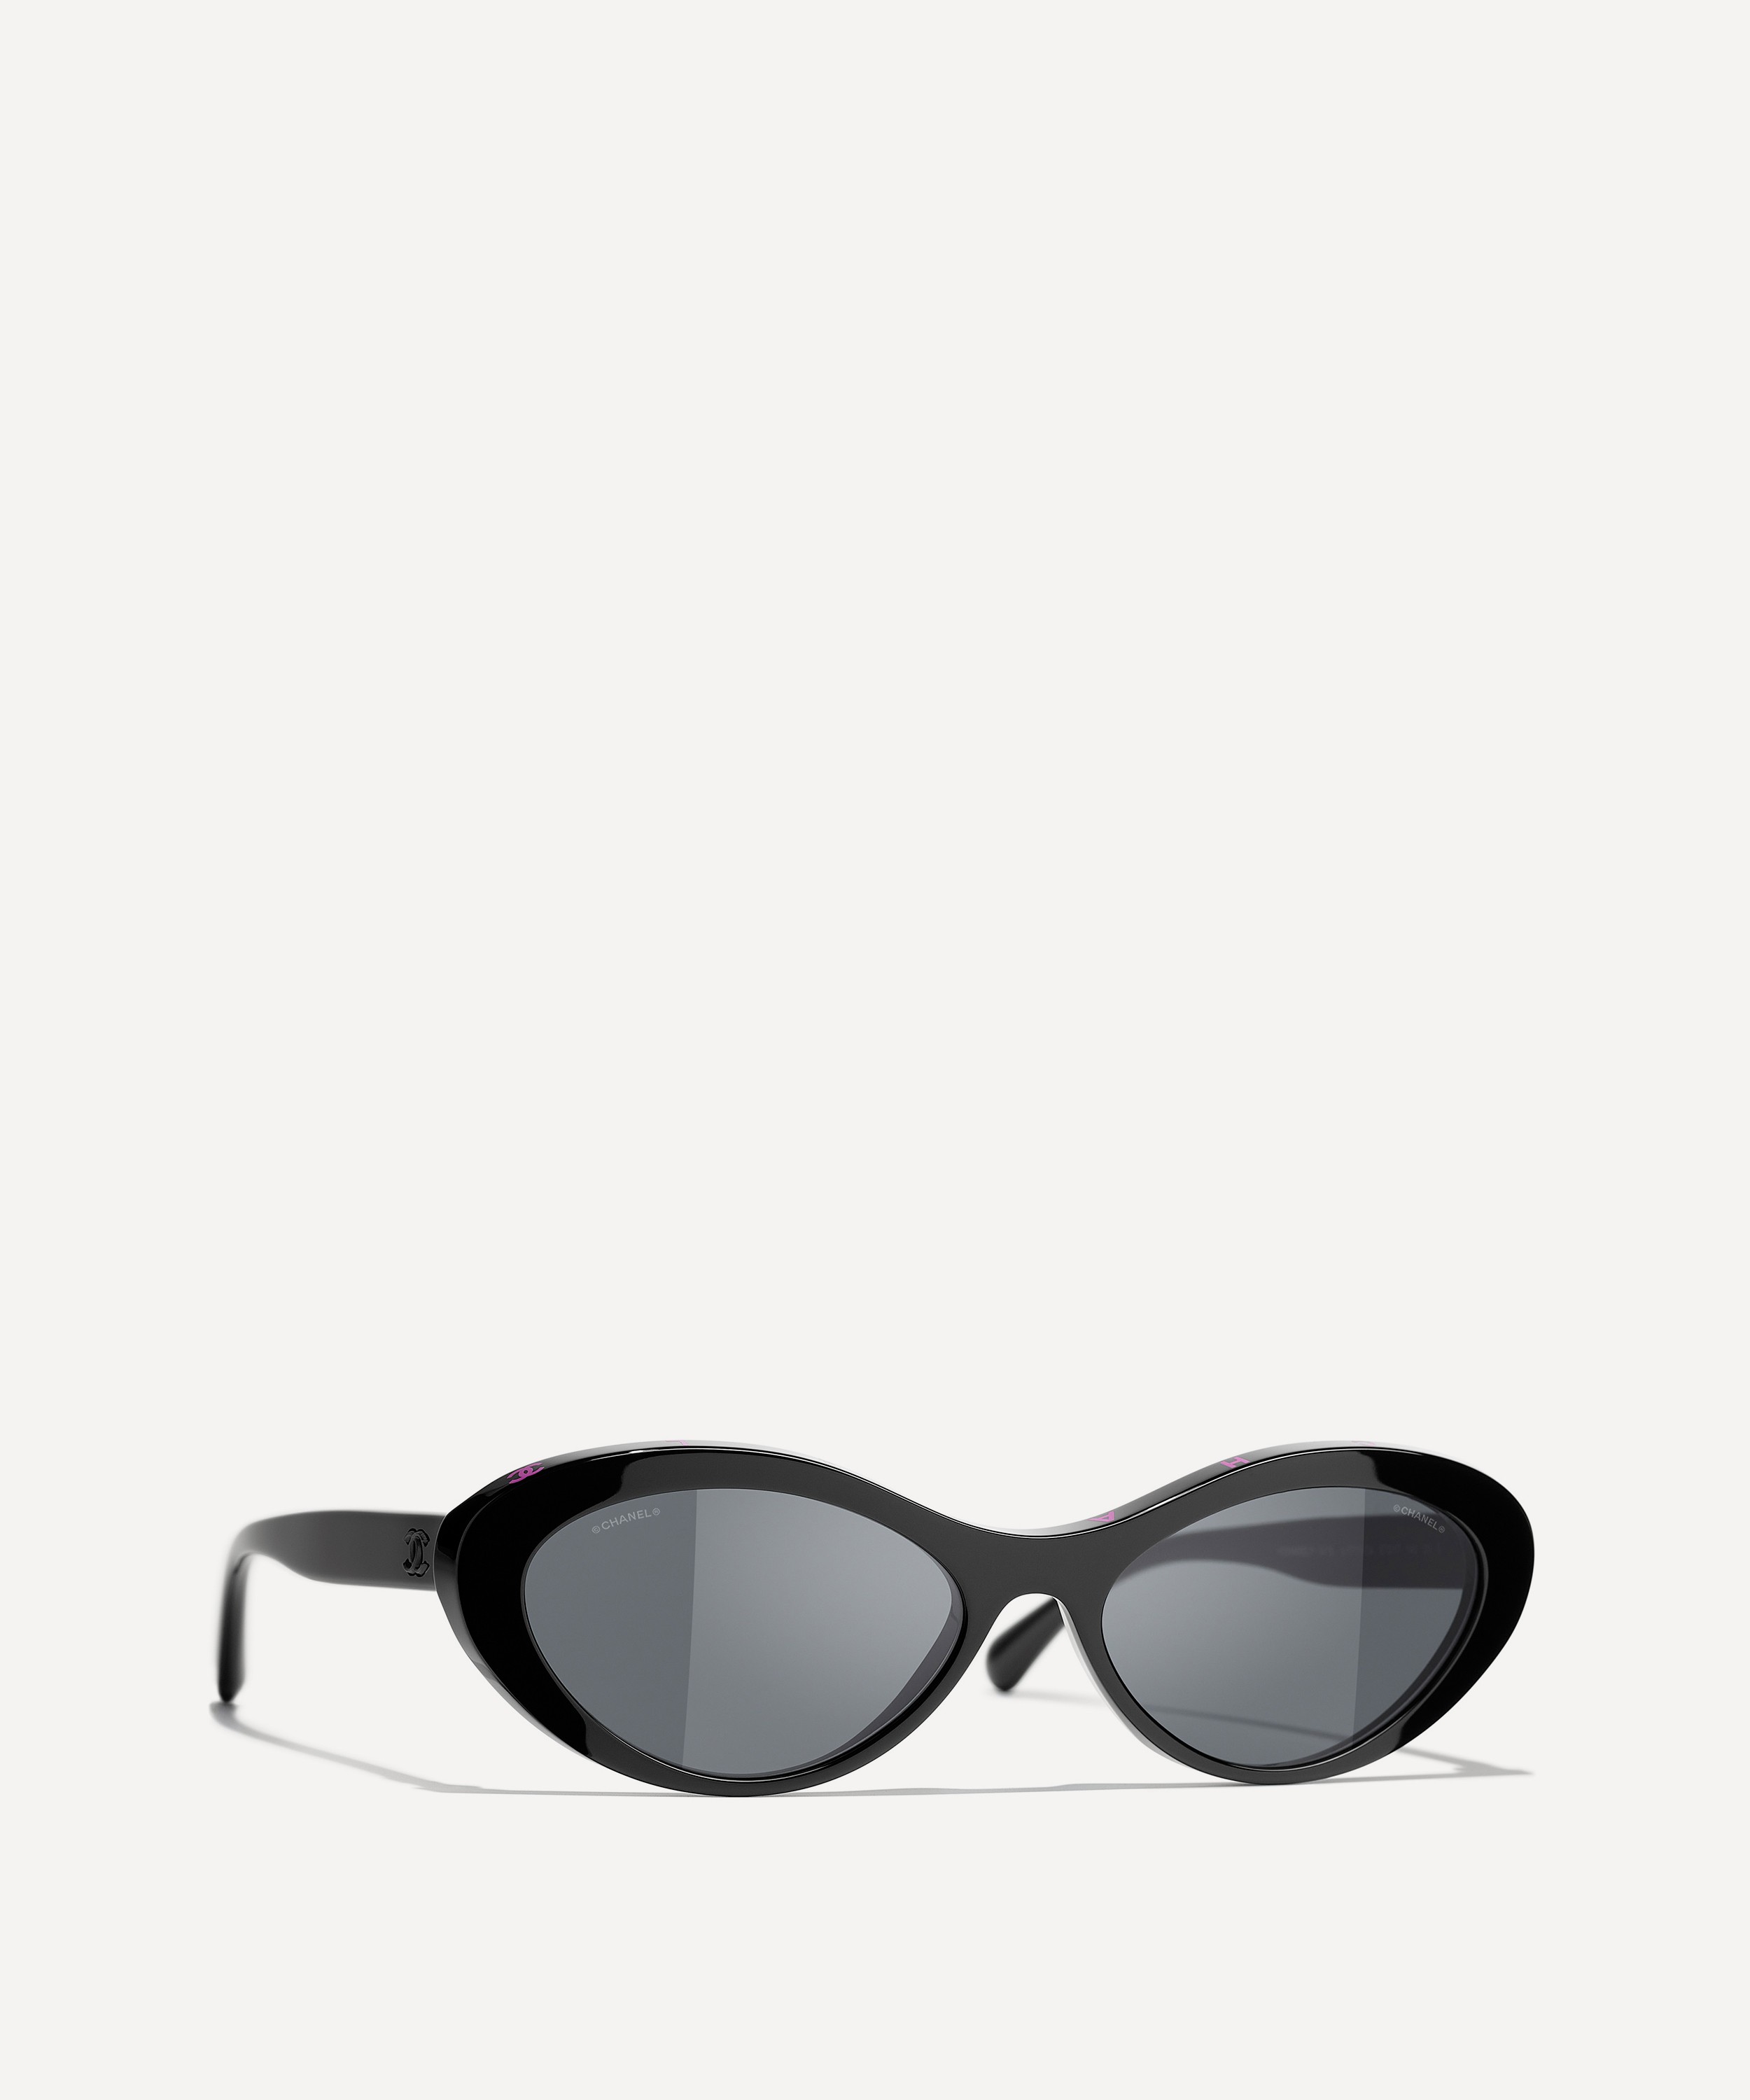 CHANEL - Oval Acetate Sunglasses